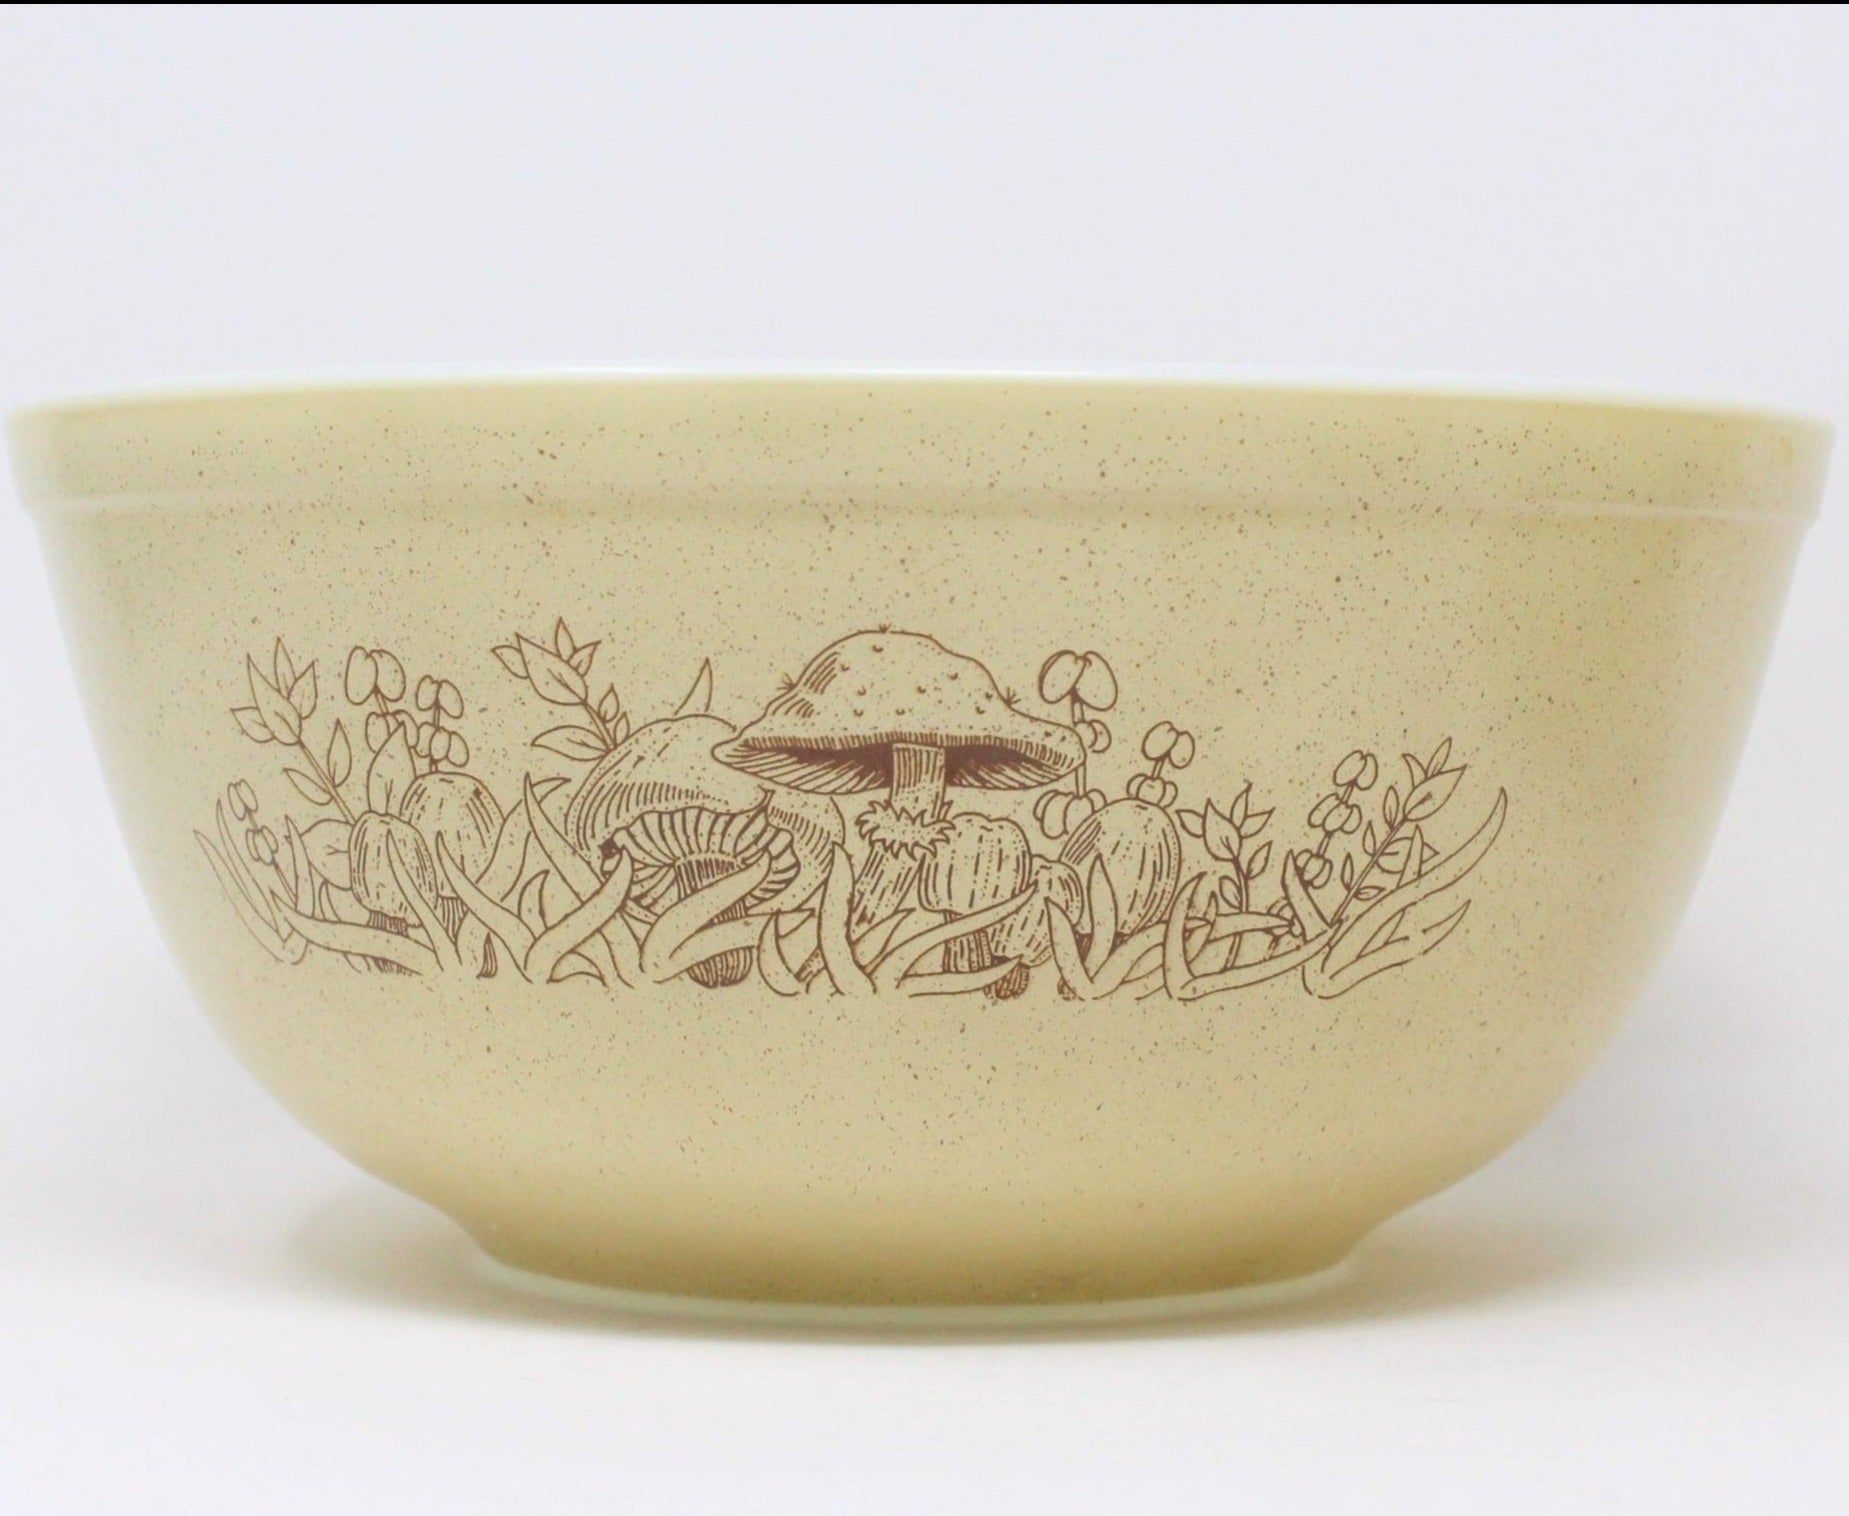 Vintage Nesting Bowls Vintage Prep Bowls Durable Glass Bowls